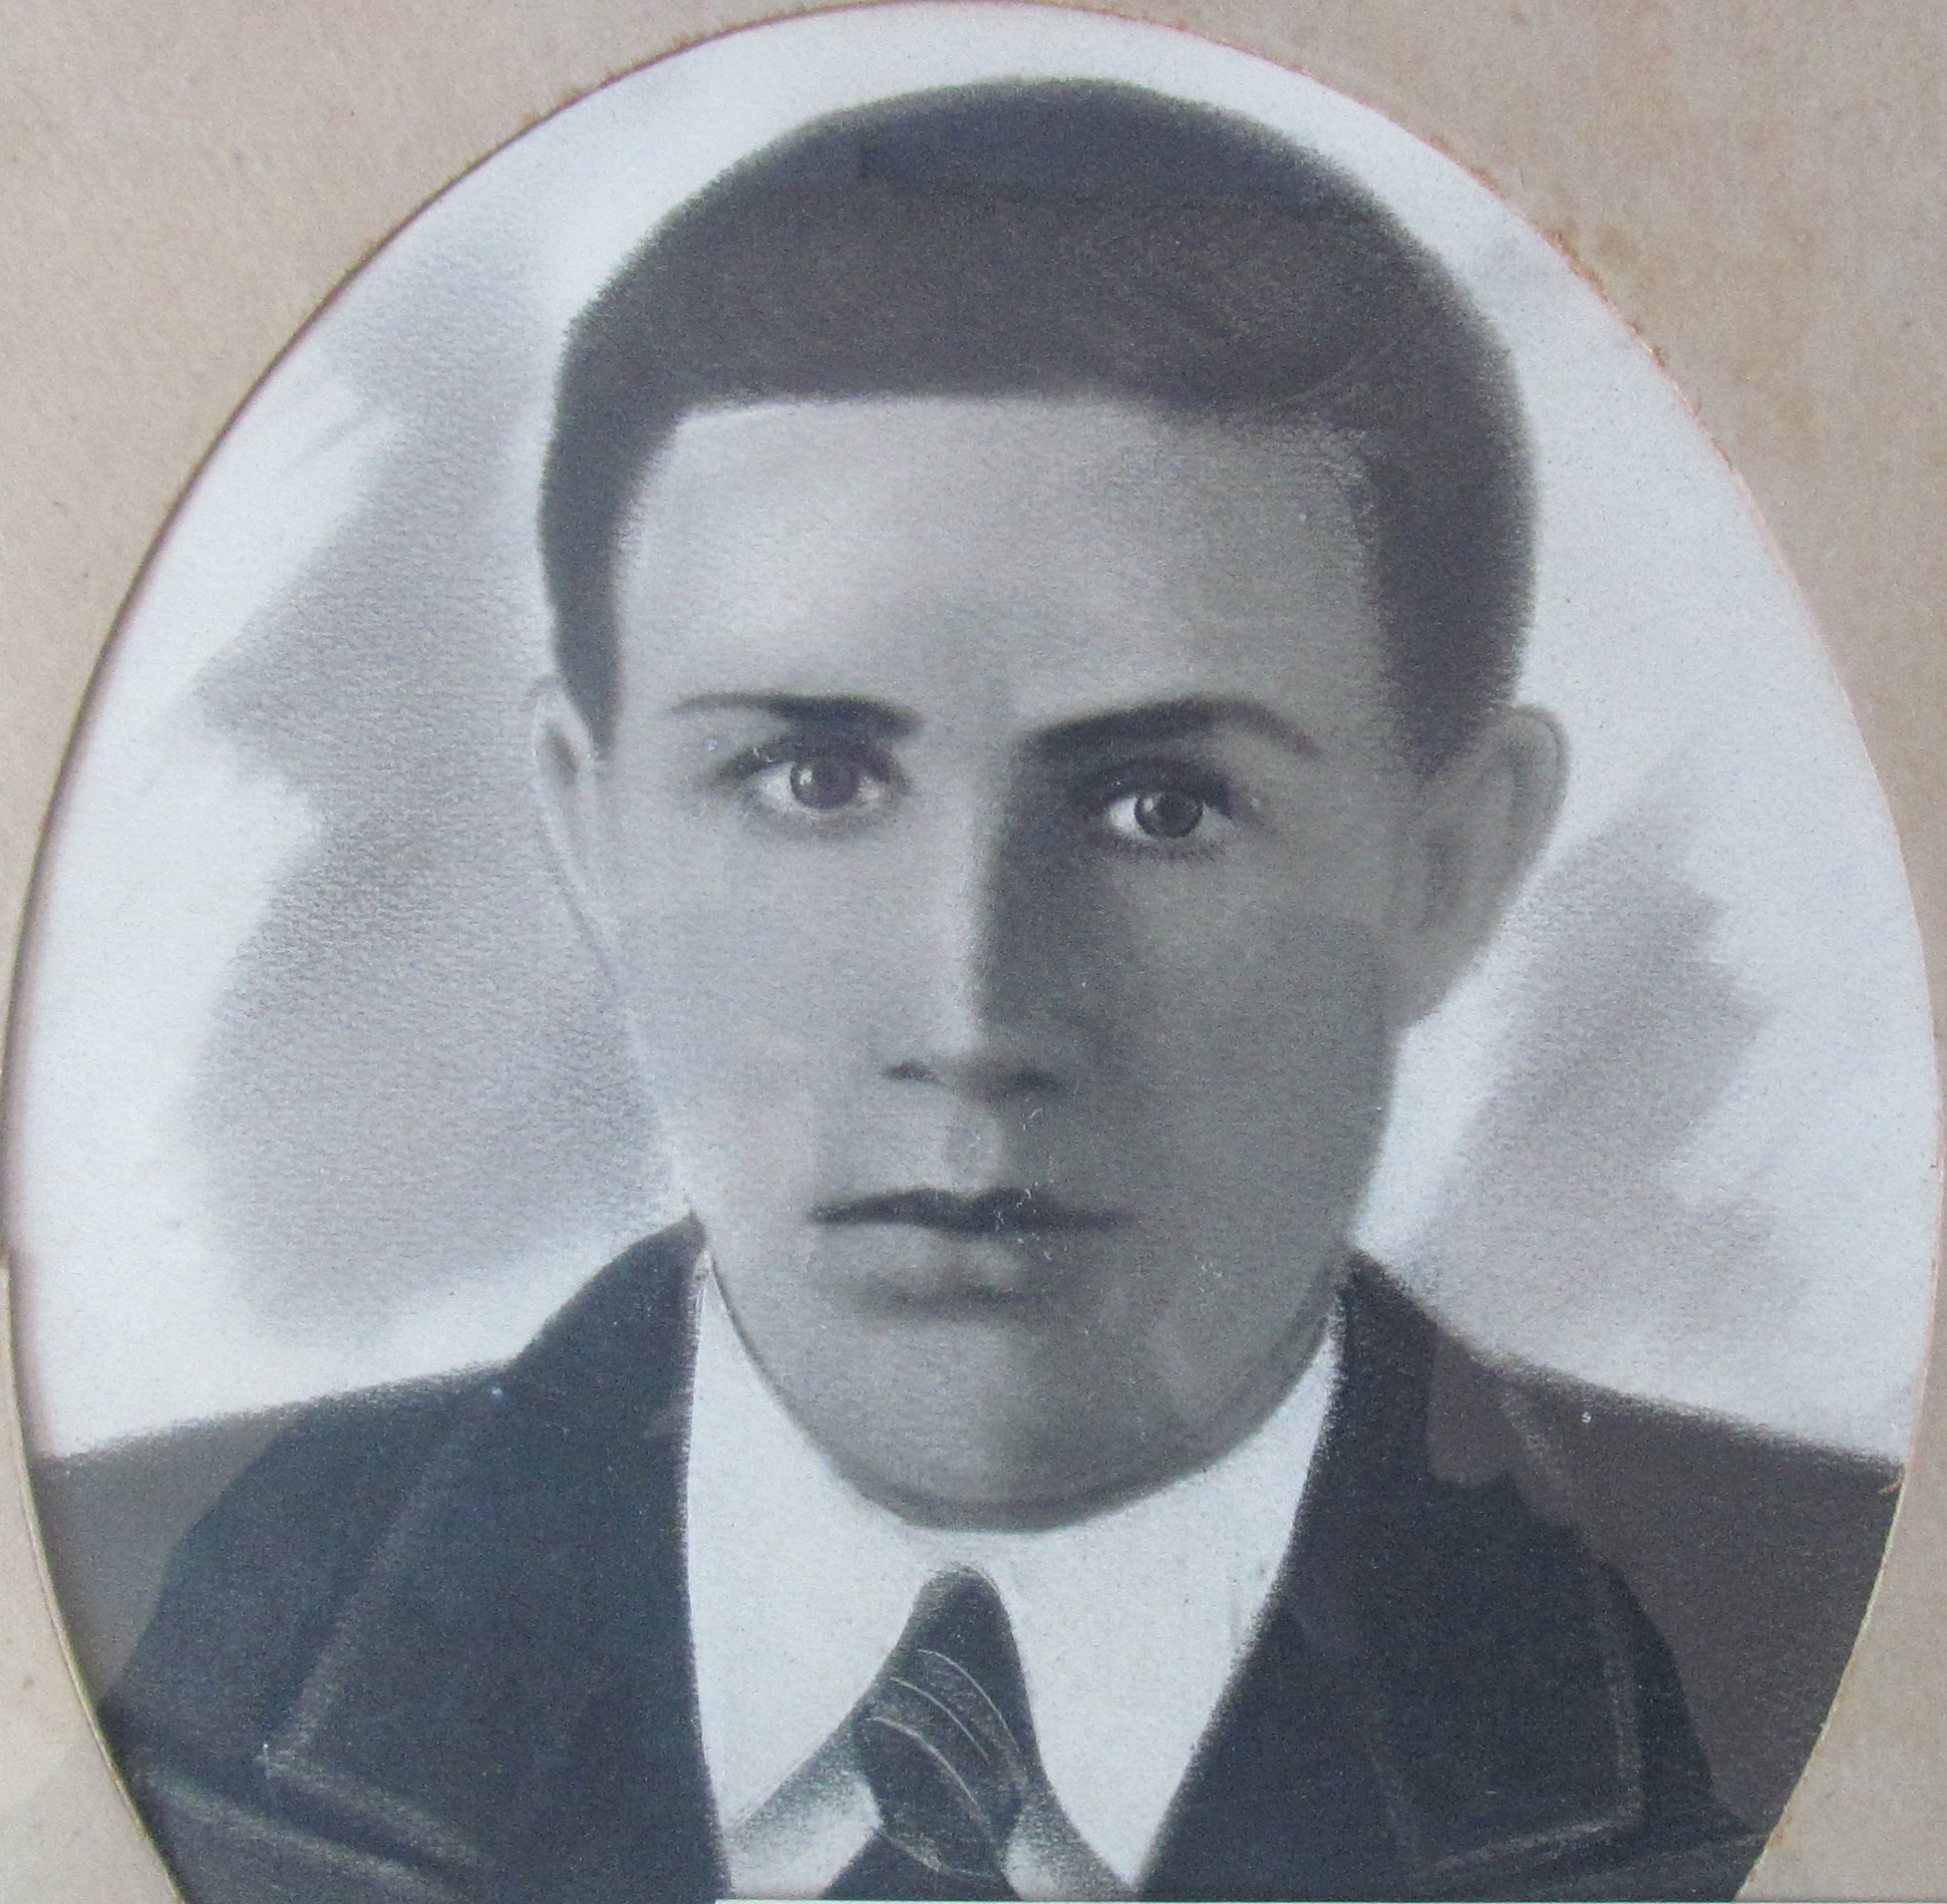 Гудимов Николай Демьянович